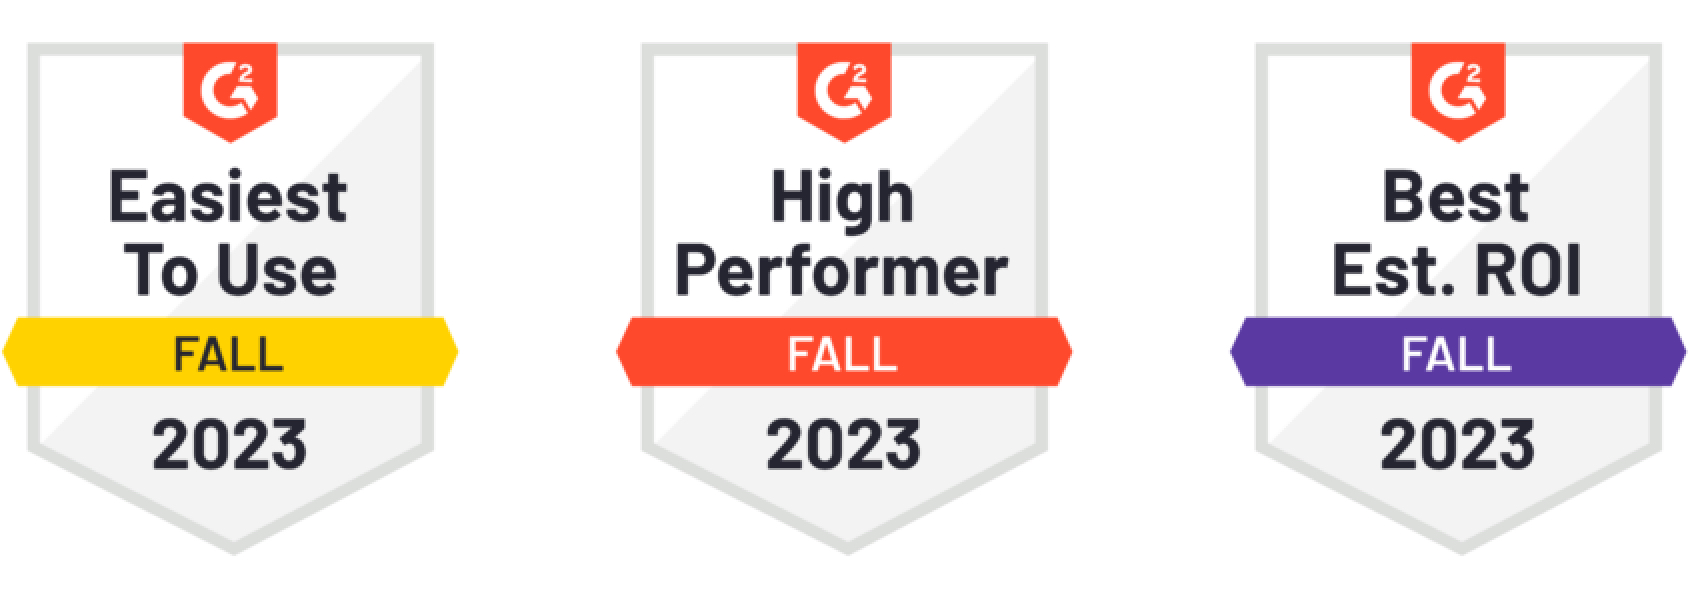 G2 fall 2023 awards